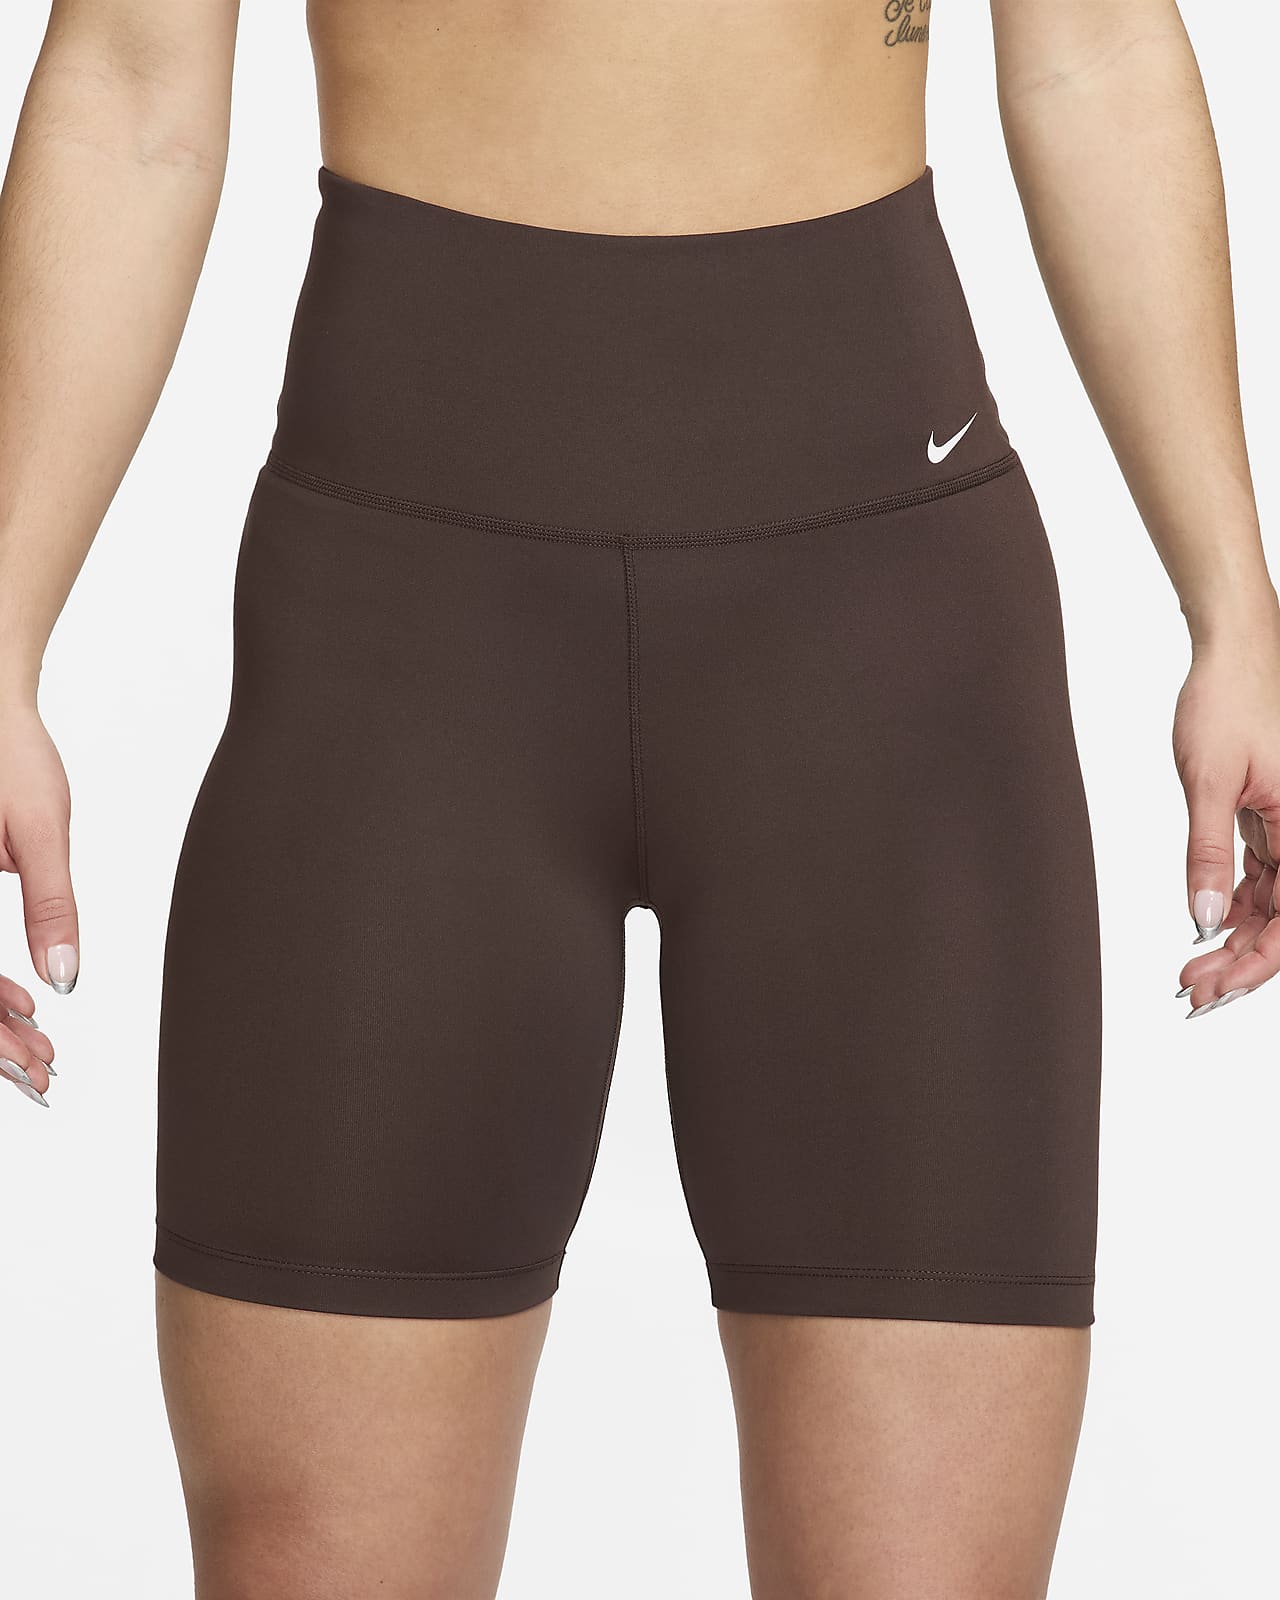 Nike Dri Fit Running 7 Inch High Rise Legging Spandex Shorts Green Tie Dye  XL